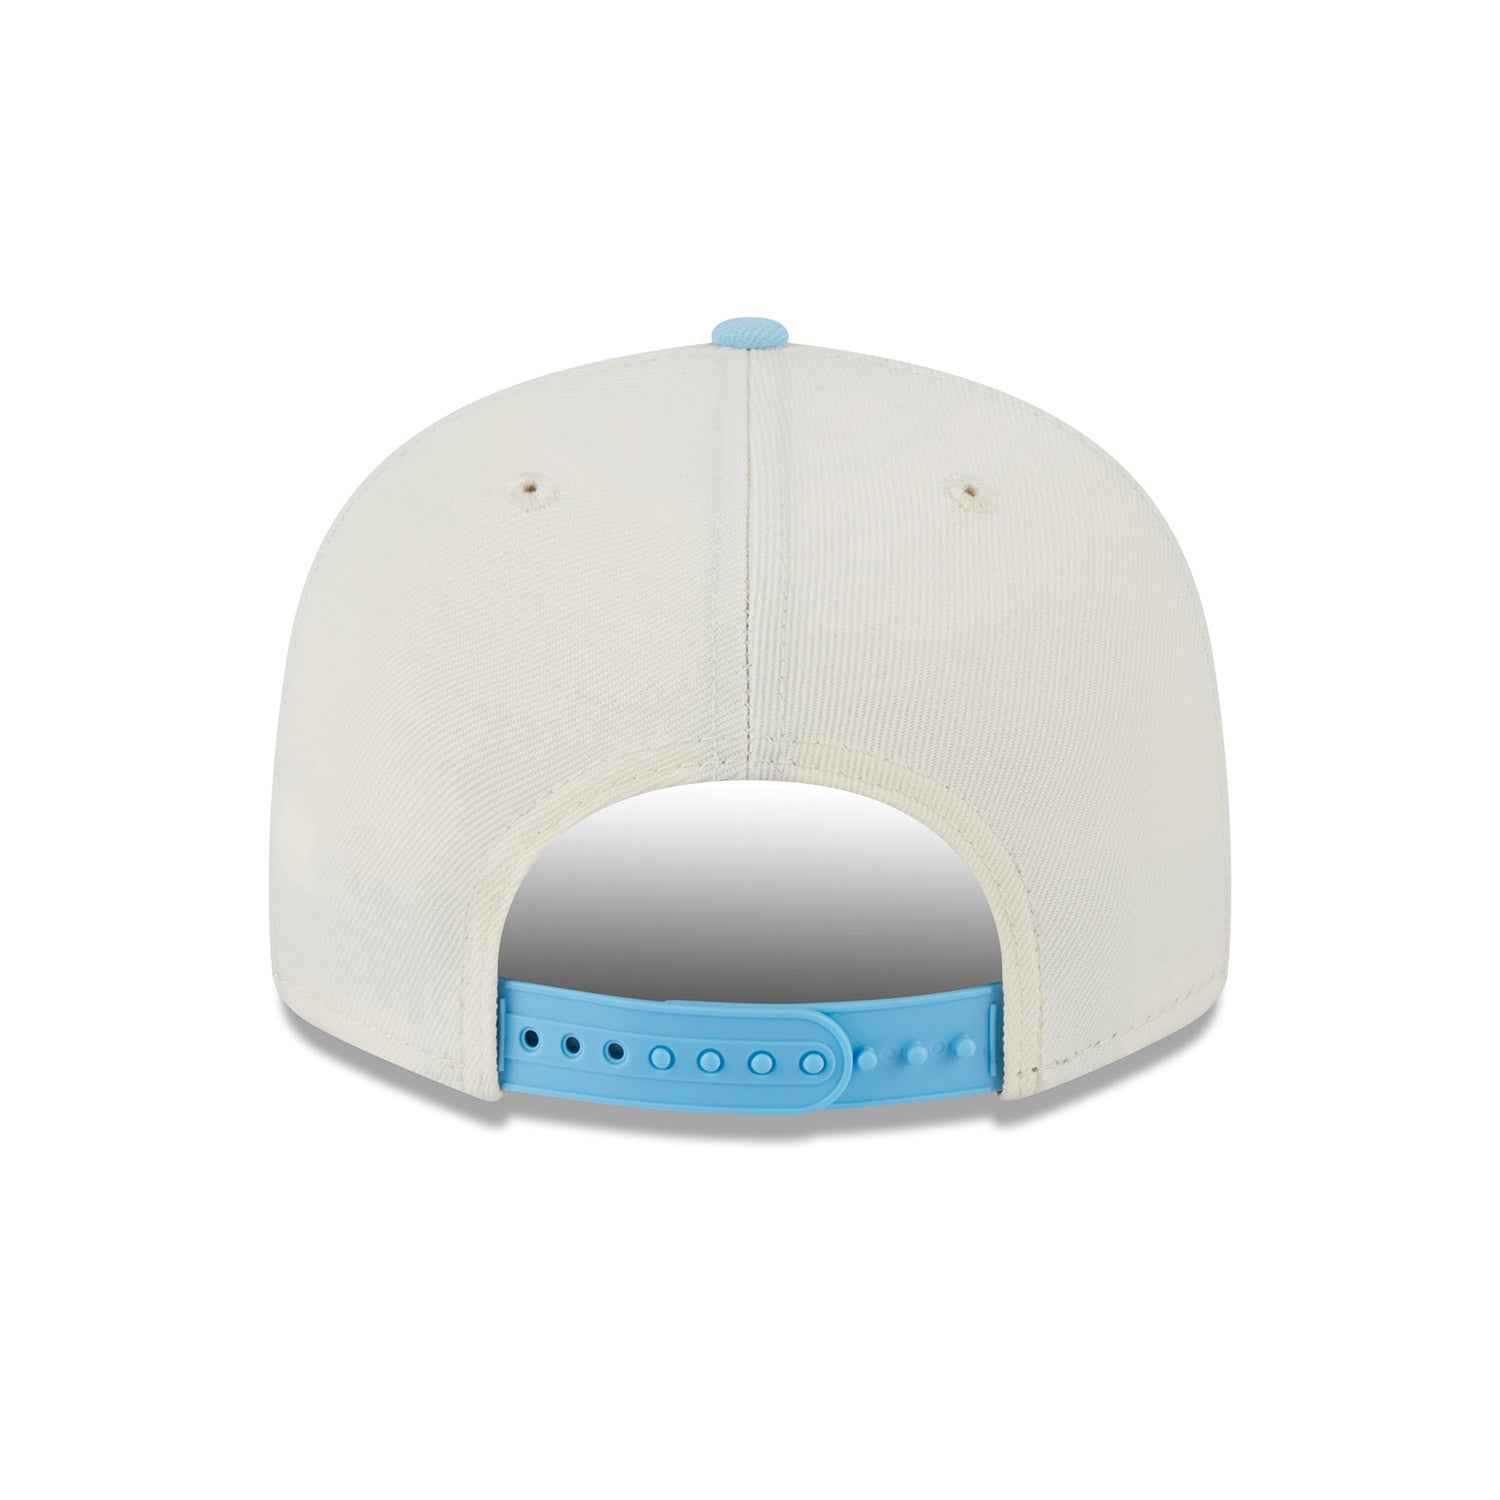 New Era Knicks Colorpack Two Tone Snapback Chrome/Light Blue Hat